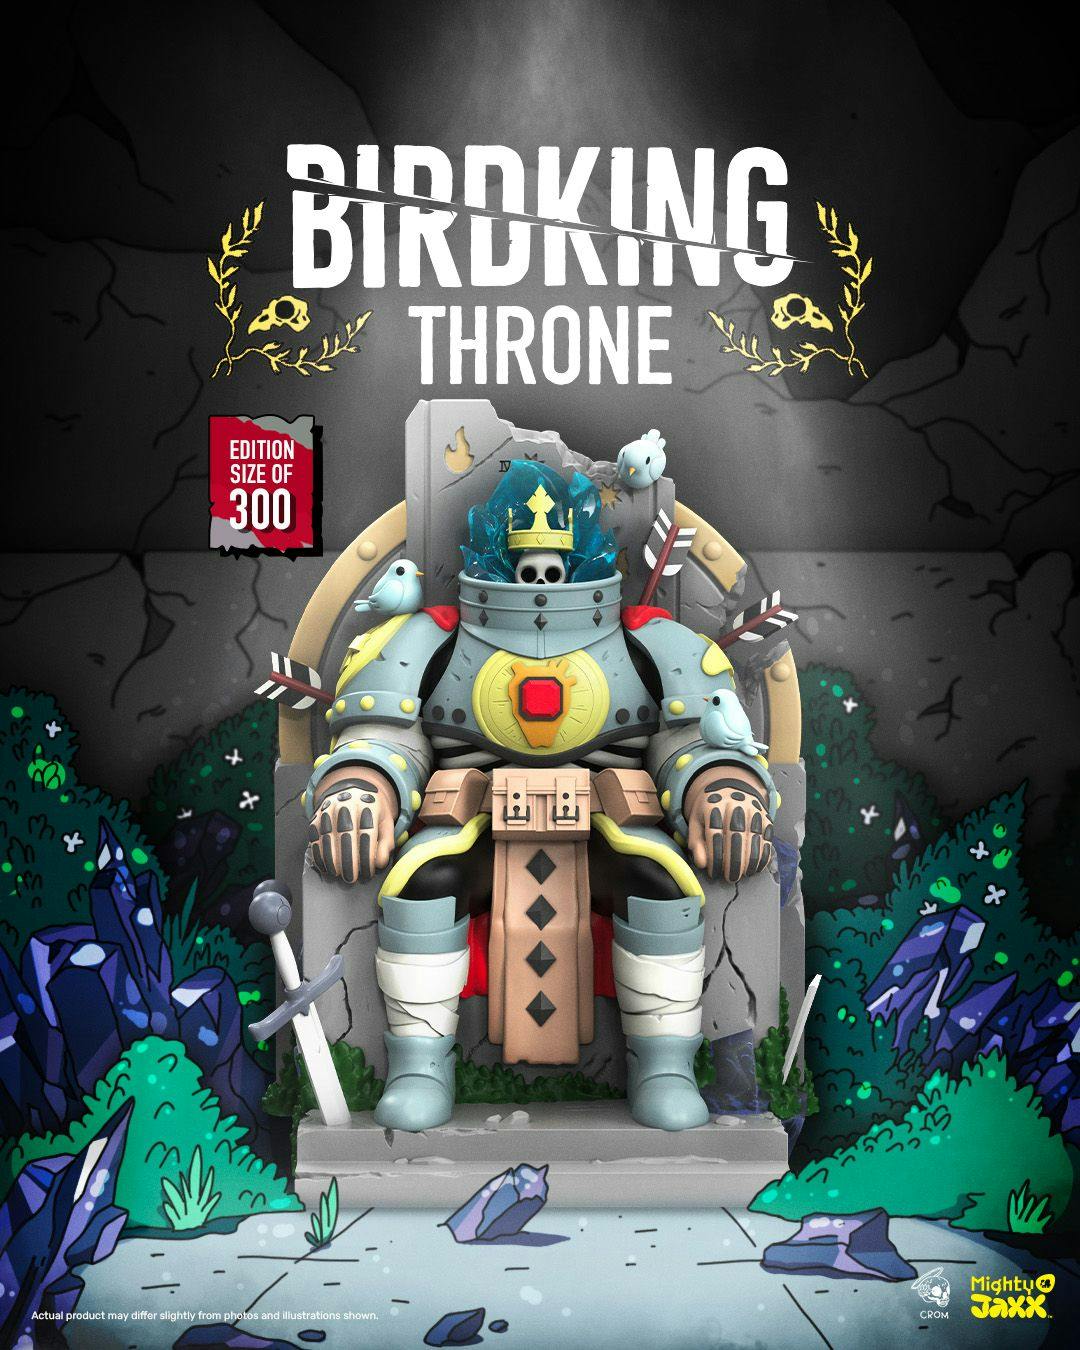 birdking throne by crom